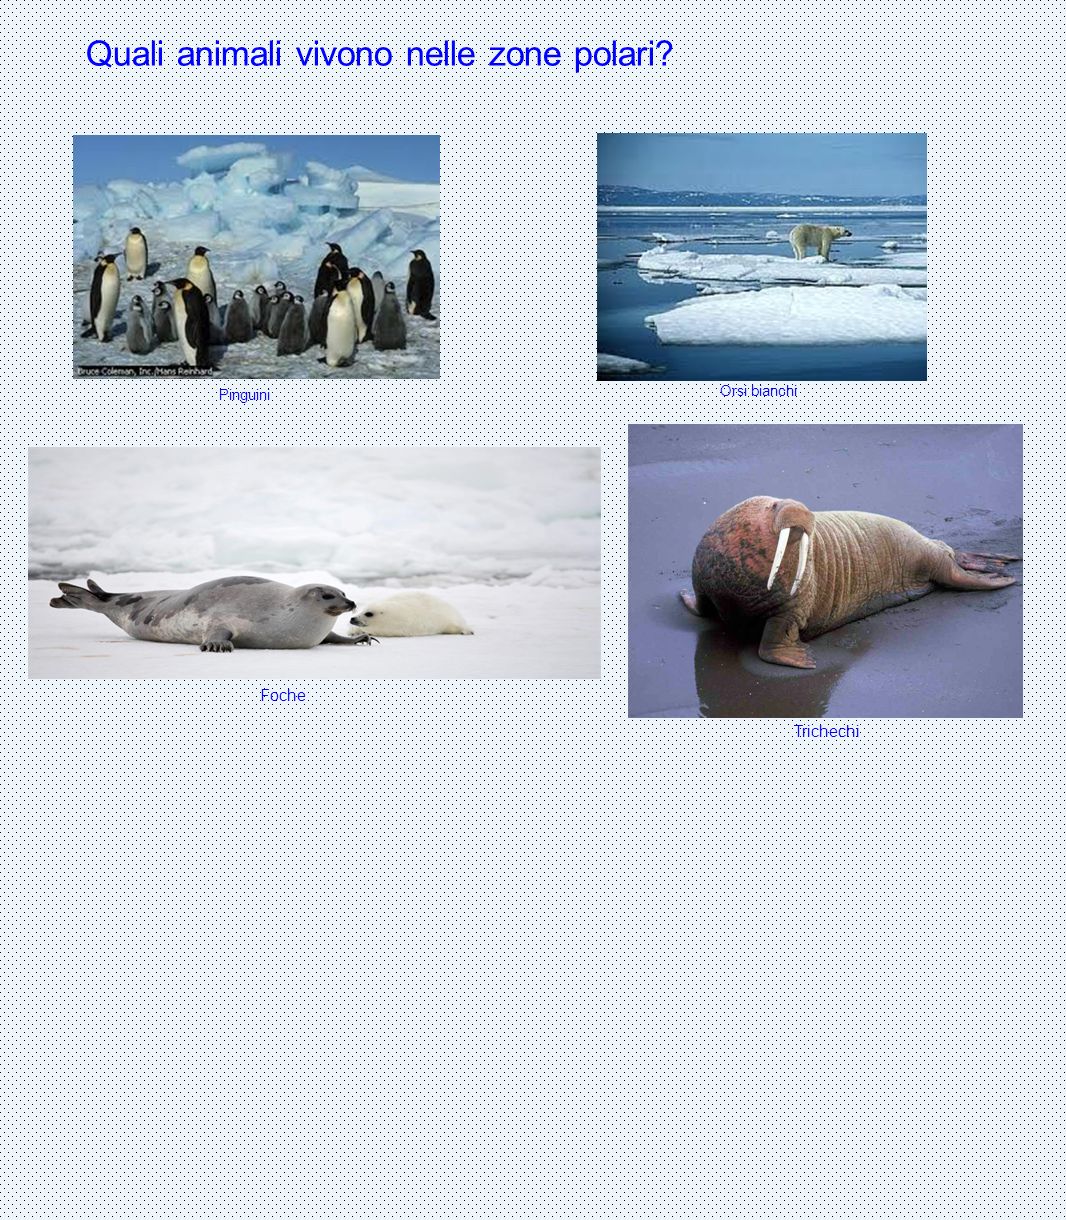 Quali animali vivono nelle zone polari